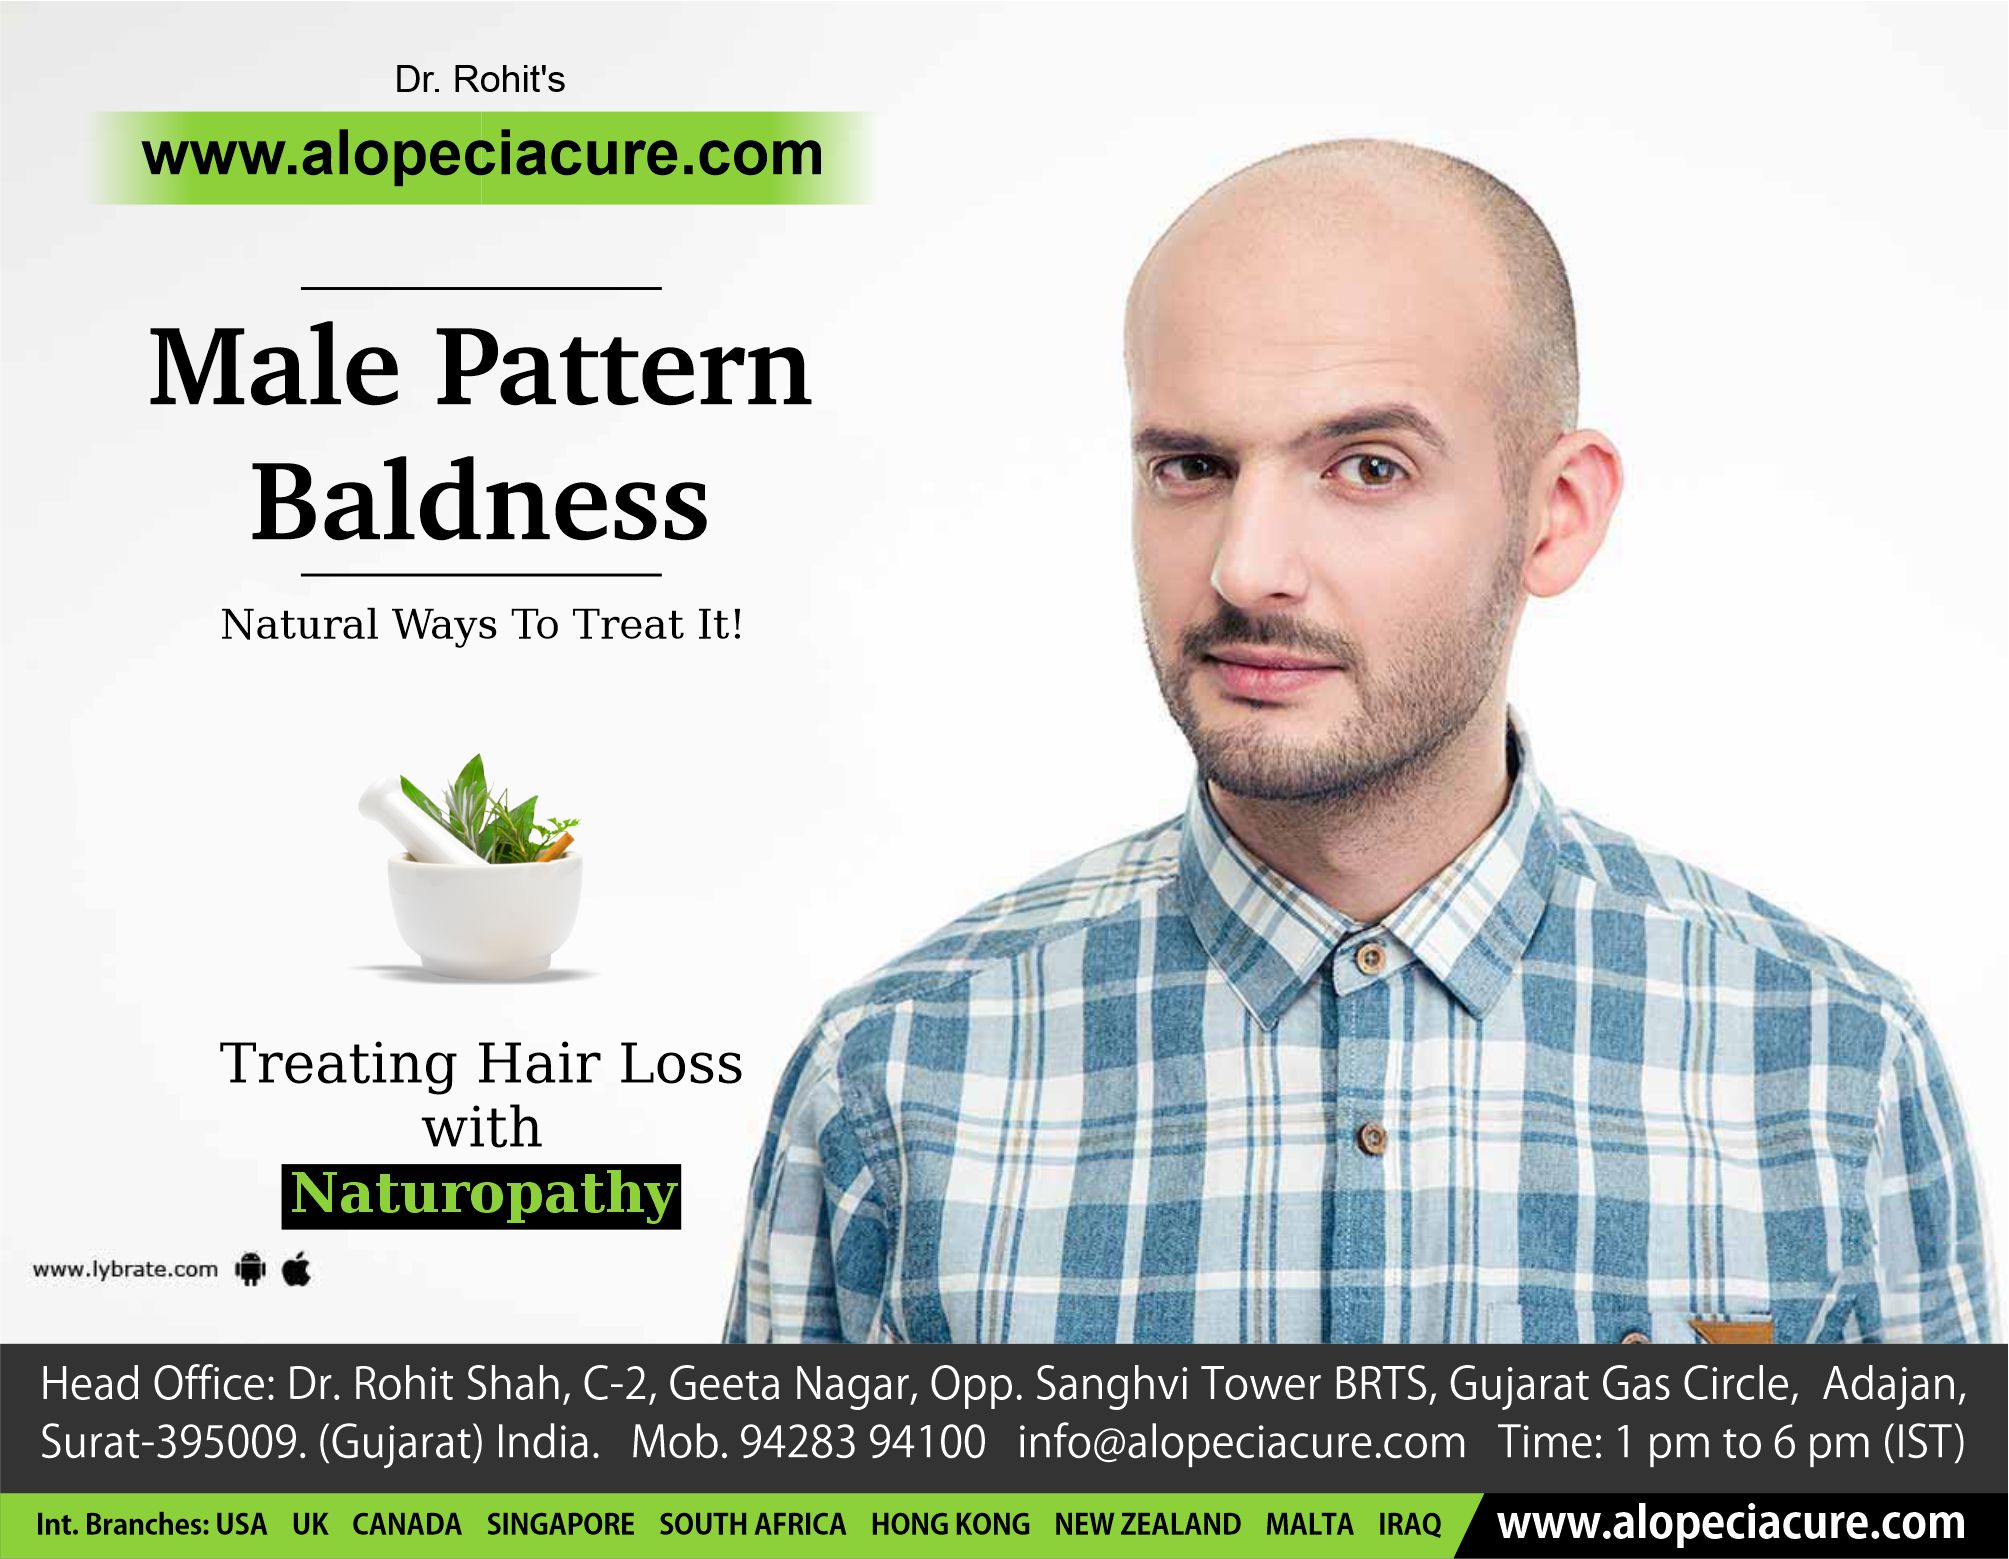 Male Pattern Baldness - Natural Ways To Treat It!